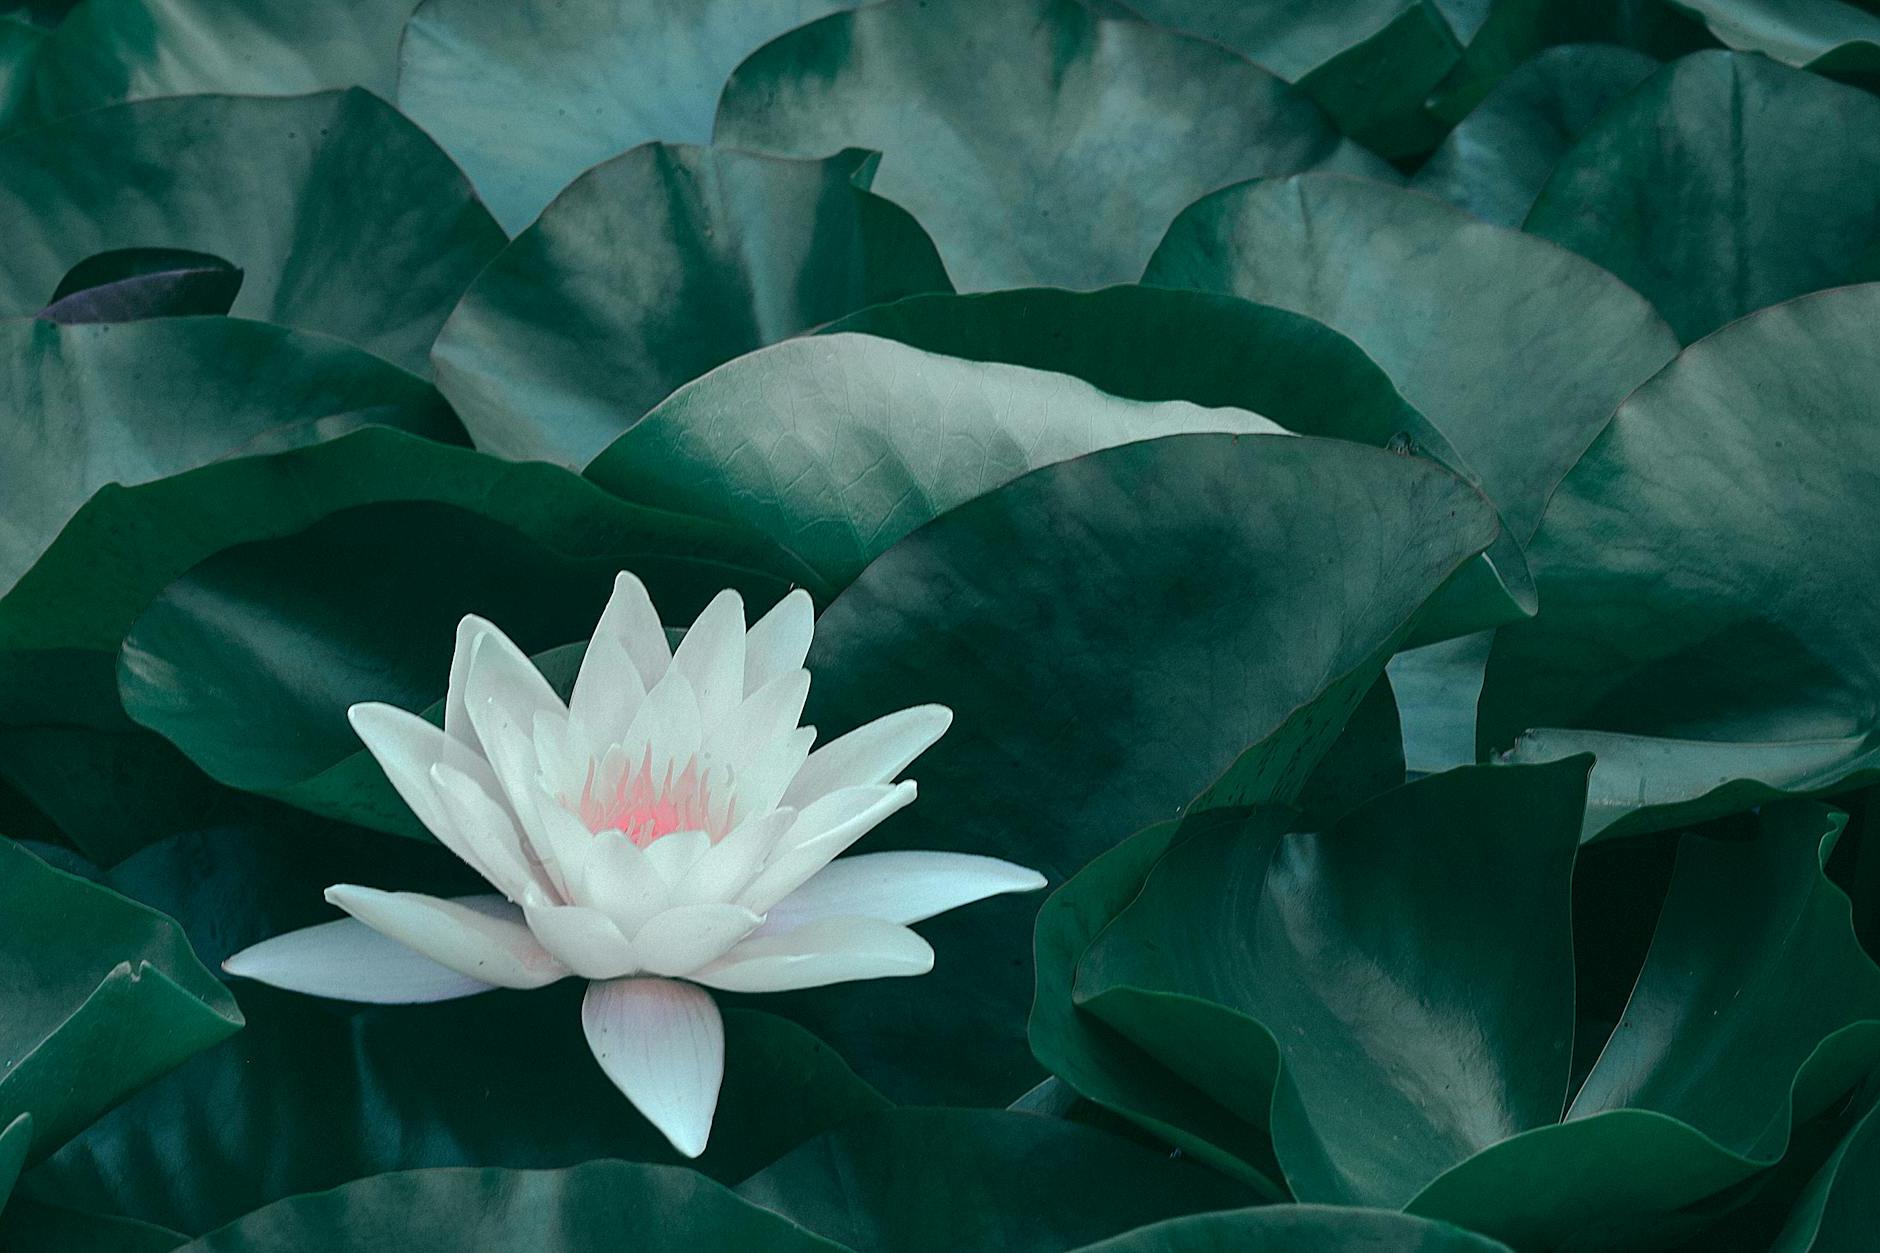 Blooming lotus flower with green leaves